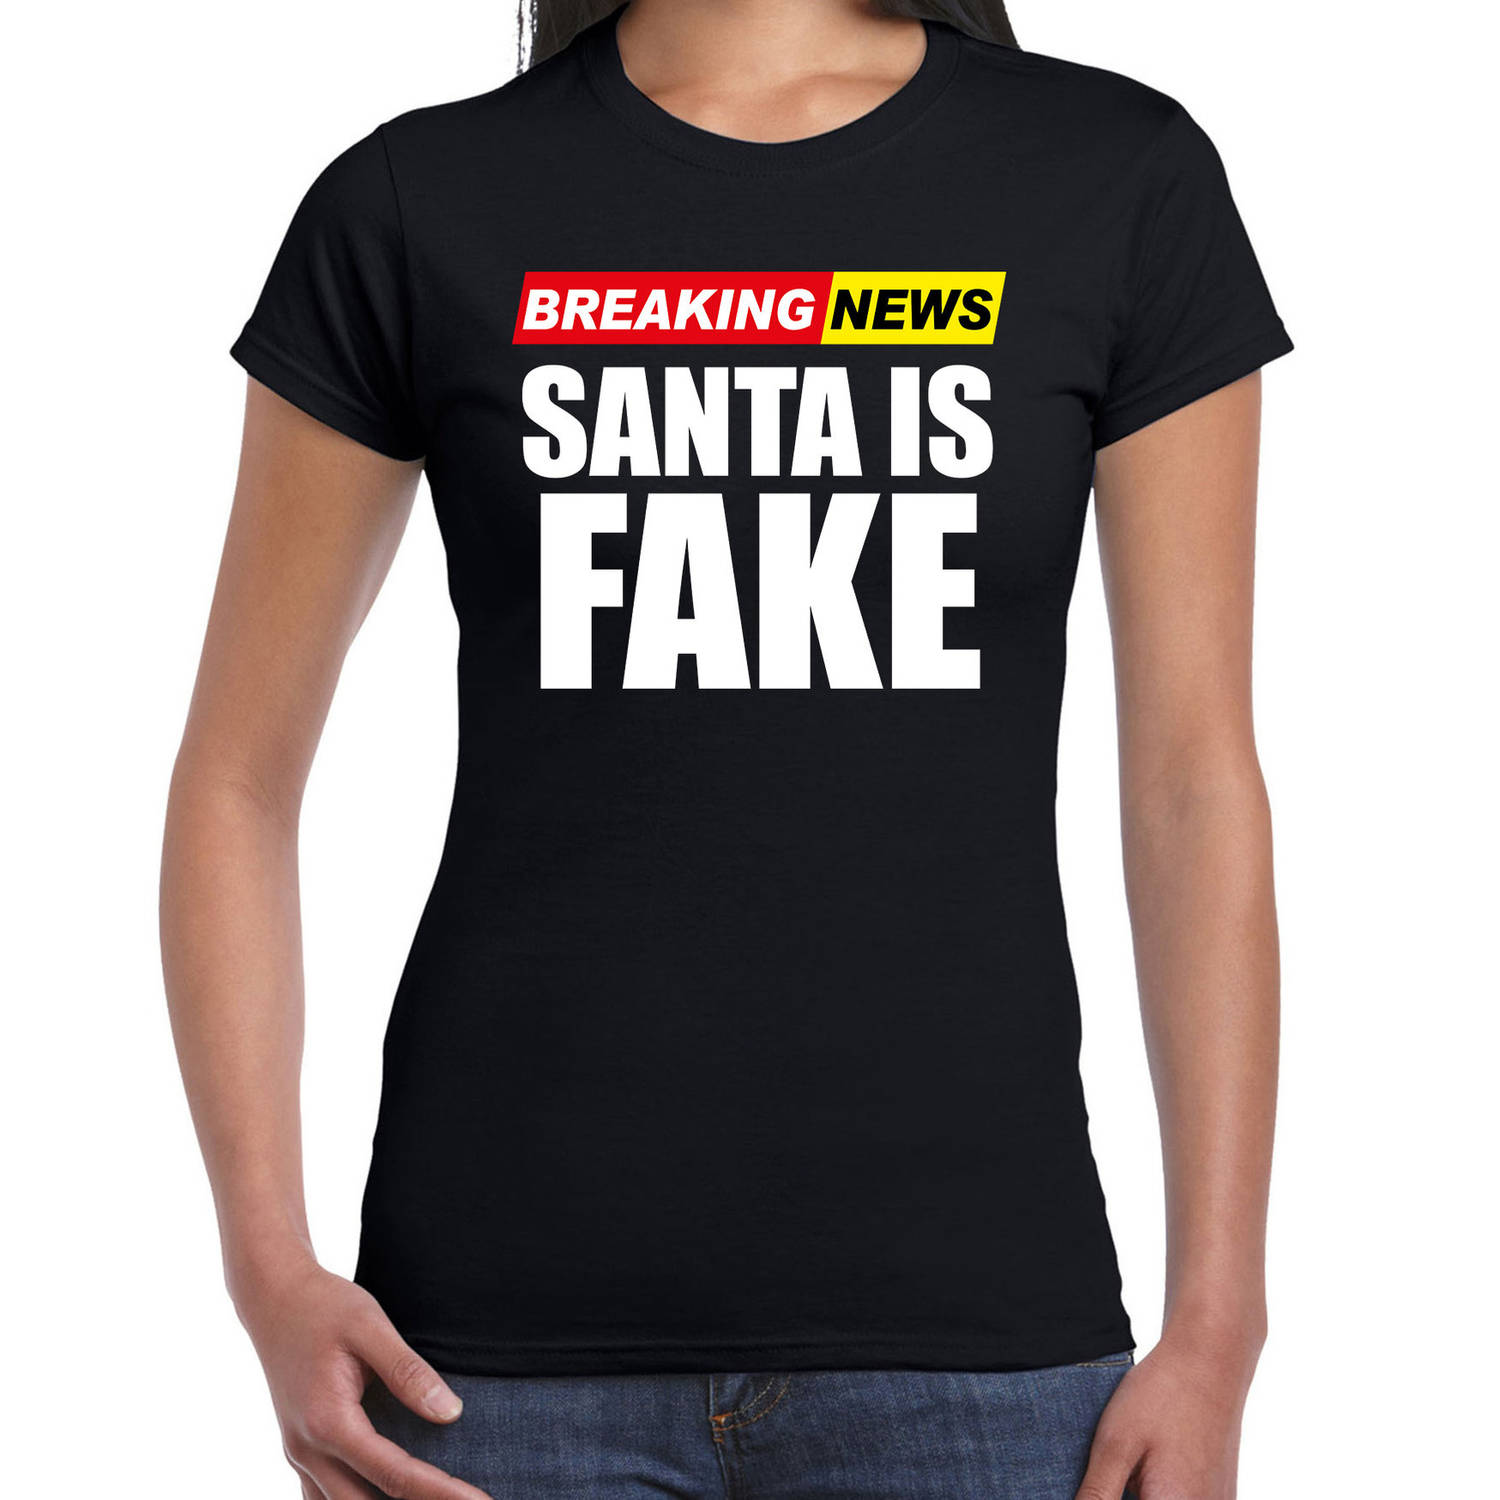 Fout humor Kerst T-shirt breaking news fake voor dames zwart L - kerst t-shirts